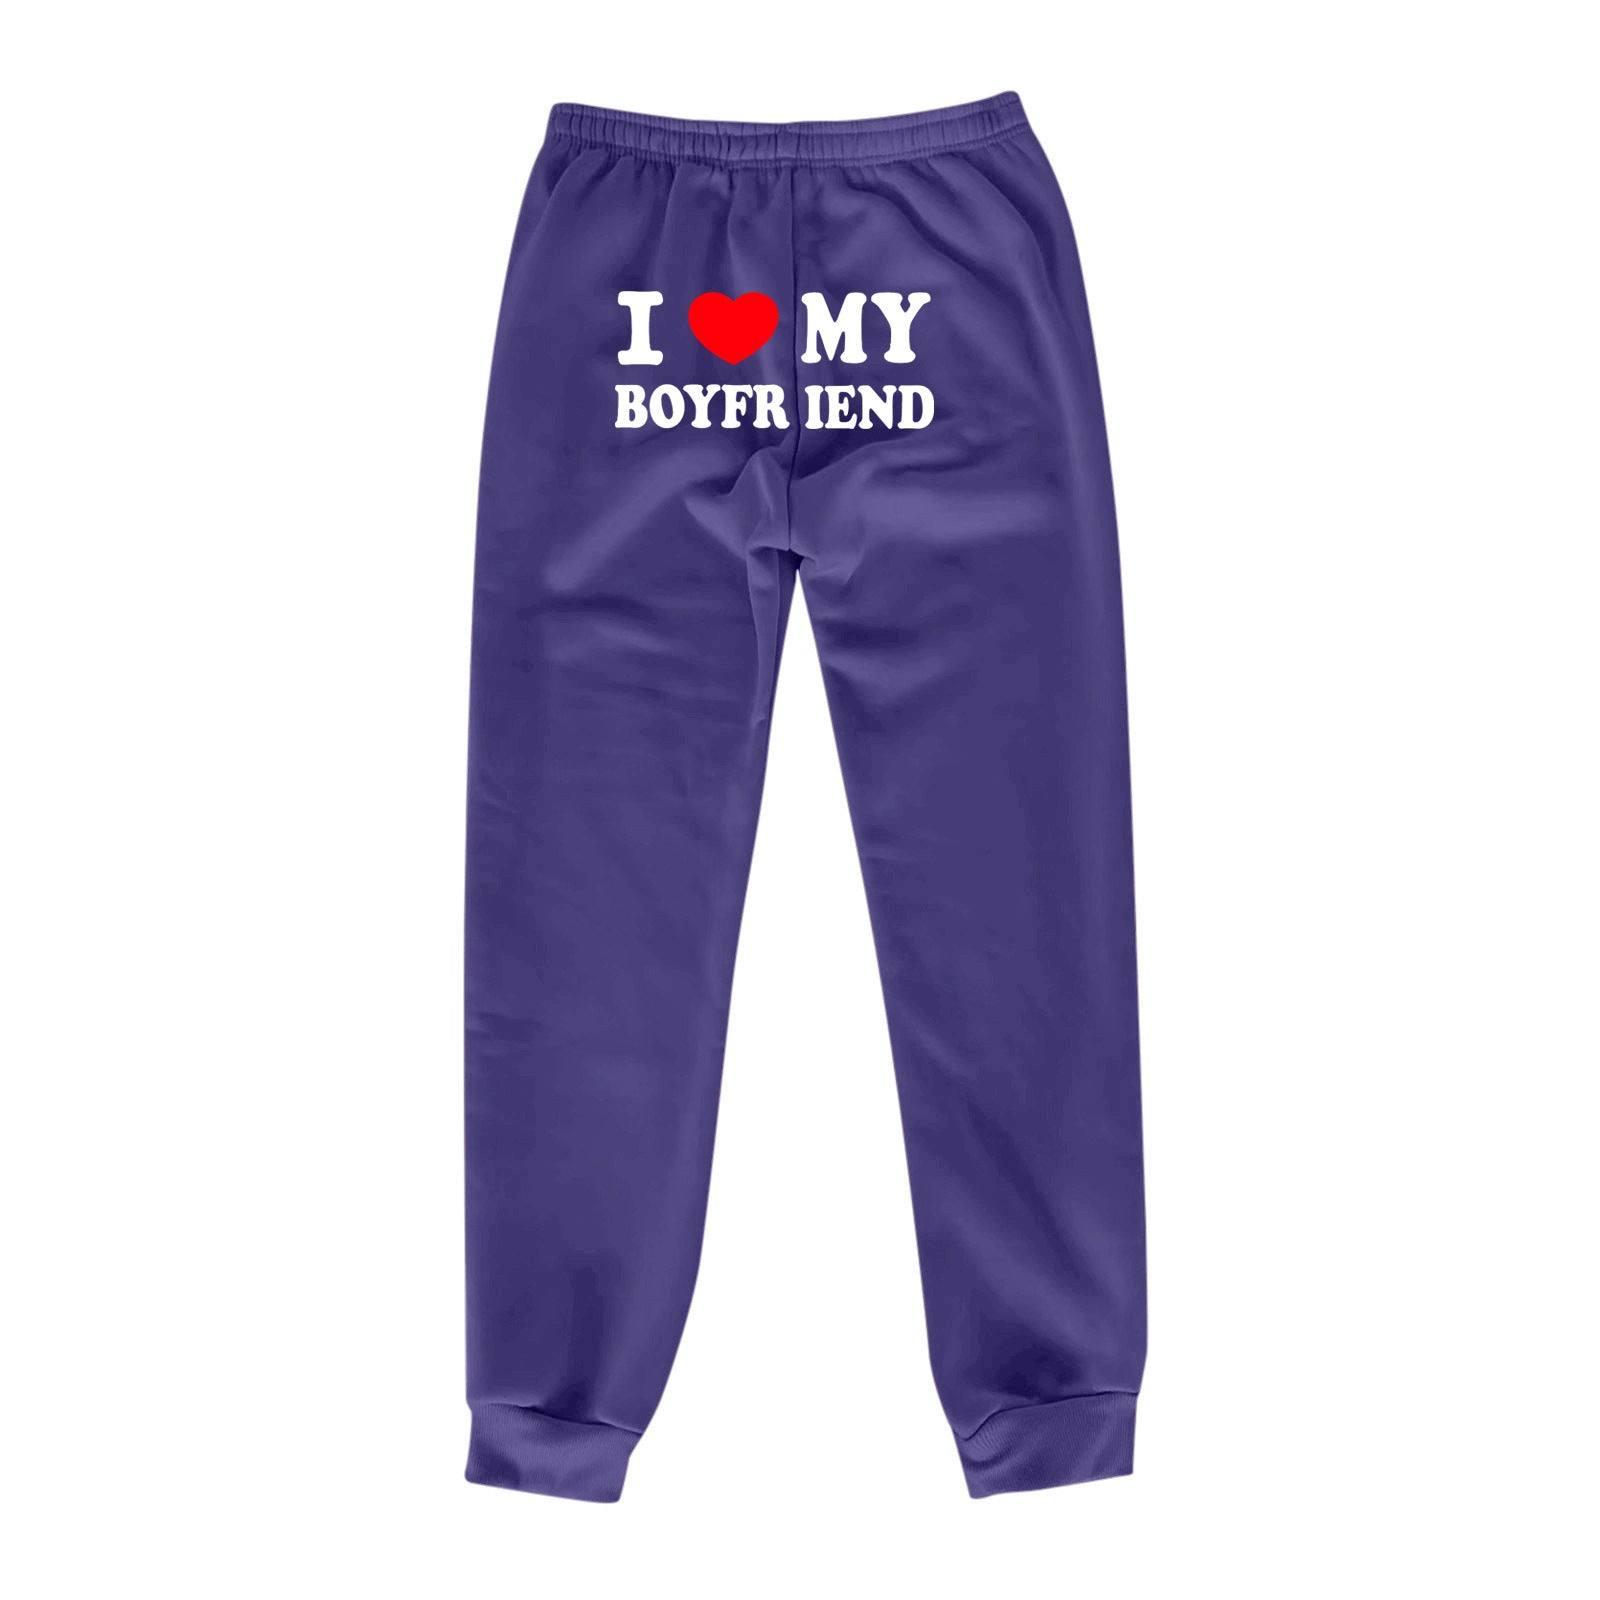 I Love MY BOYFRIEND Printed Trousers Casual Sweatpants Men-Dark Purple Back Picture-15